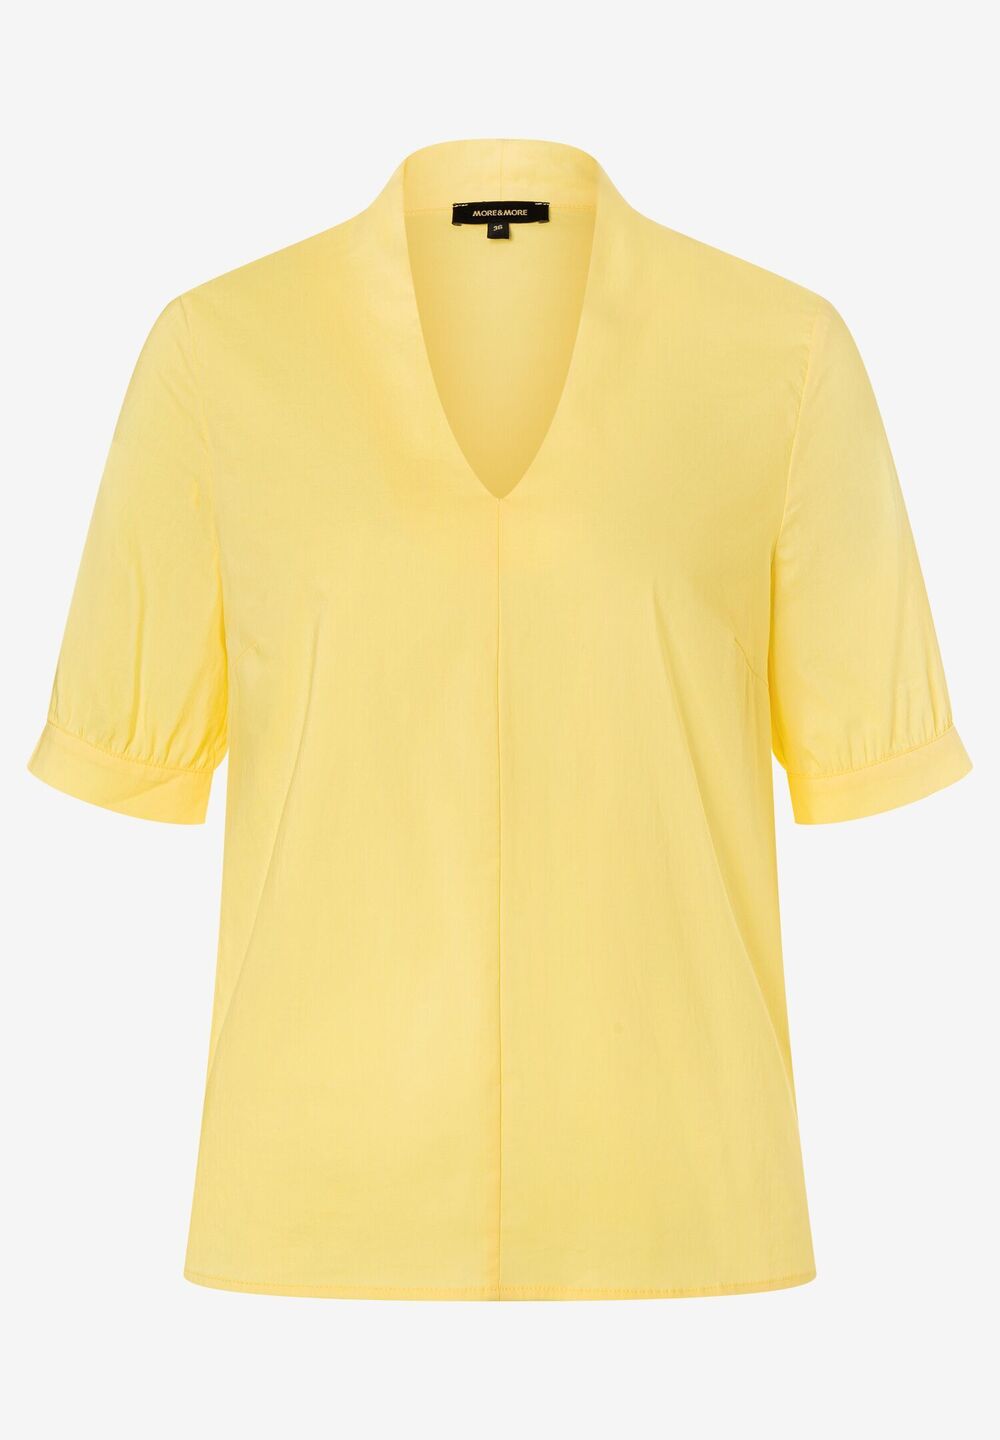 Bluse, daisy yellow, Frühjahrs-Kollektion, gelb Frontansicht